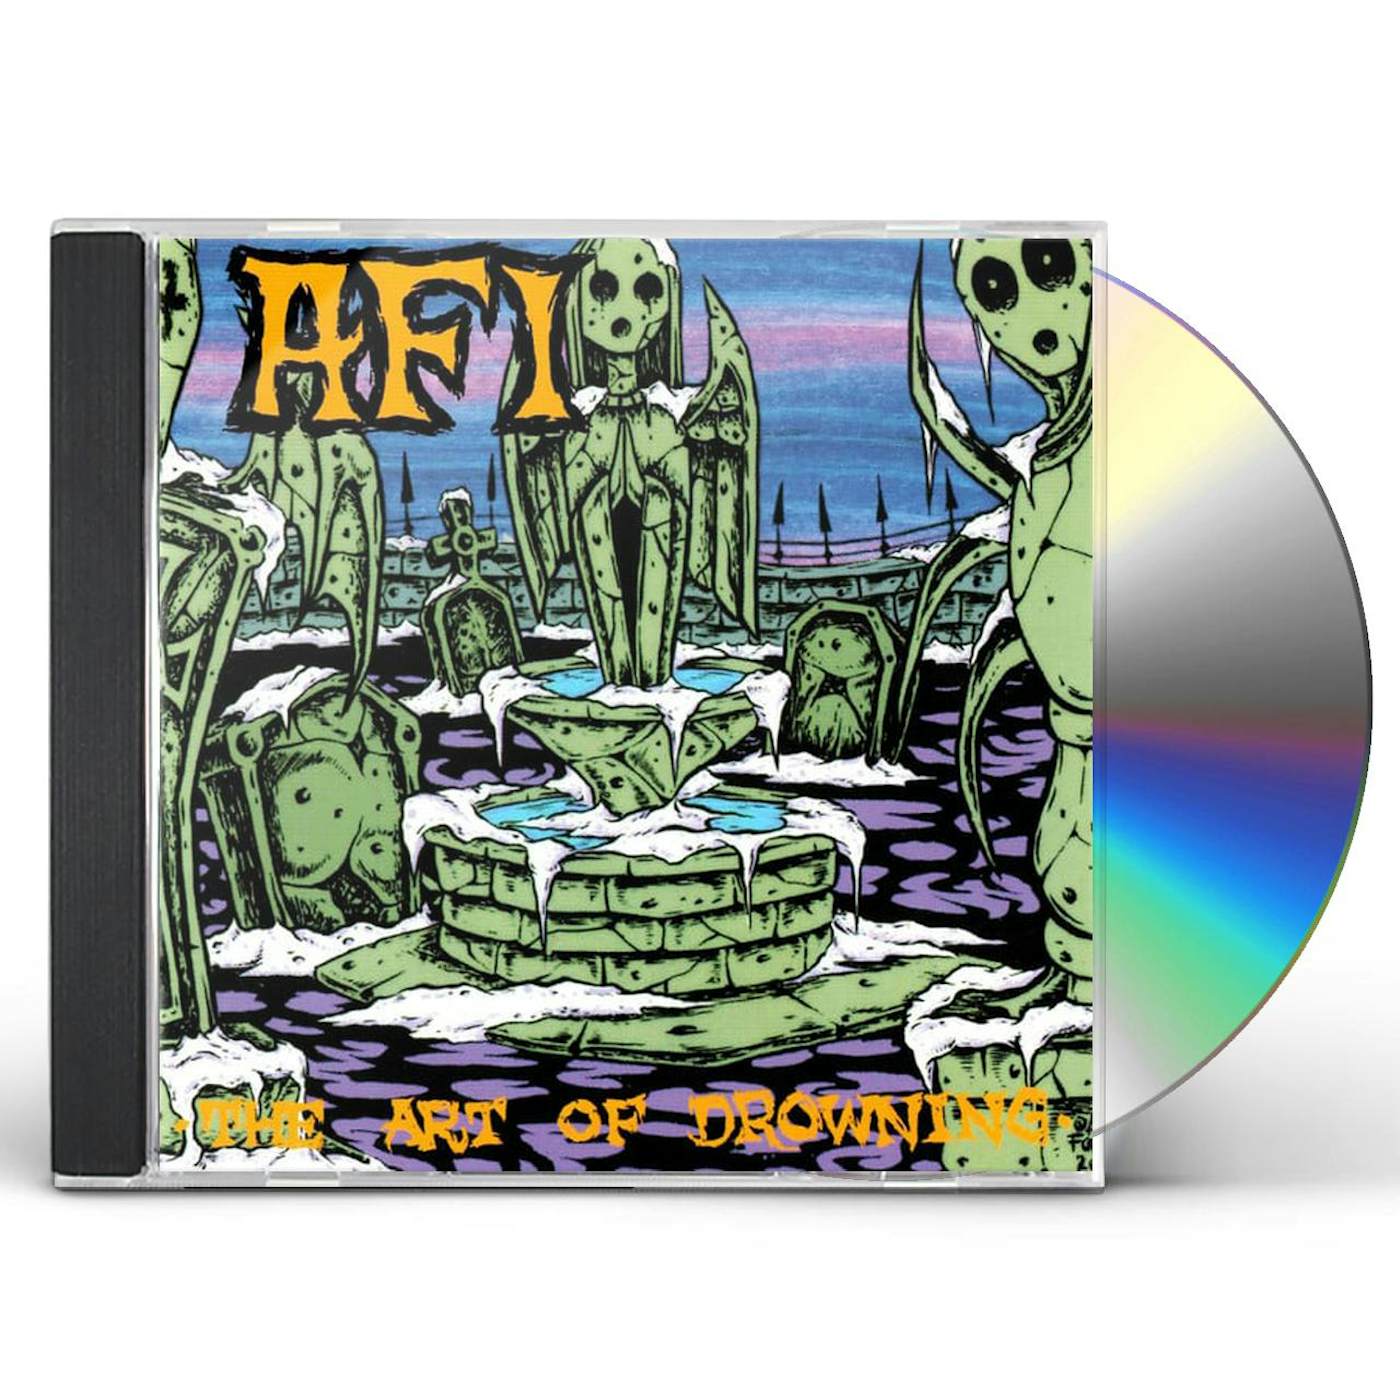 AFI ART OF DROWNING CD